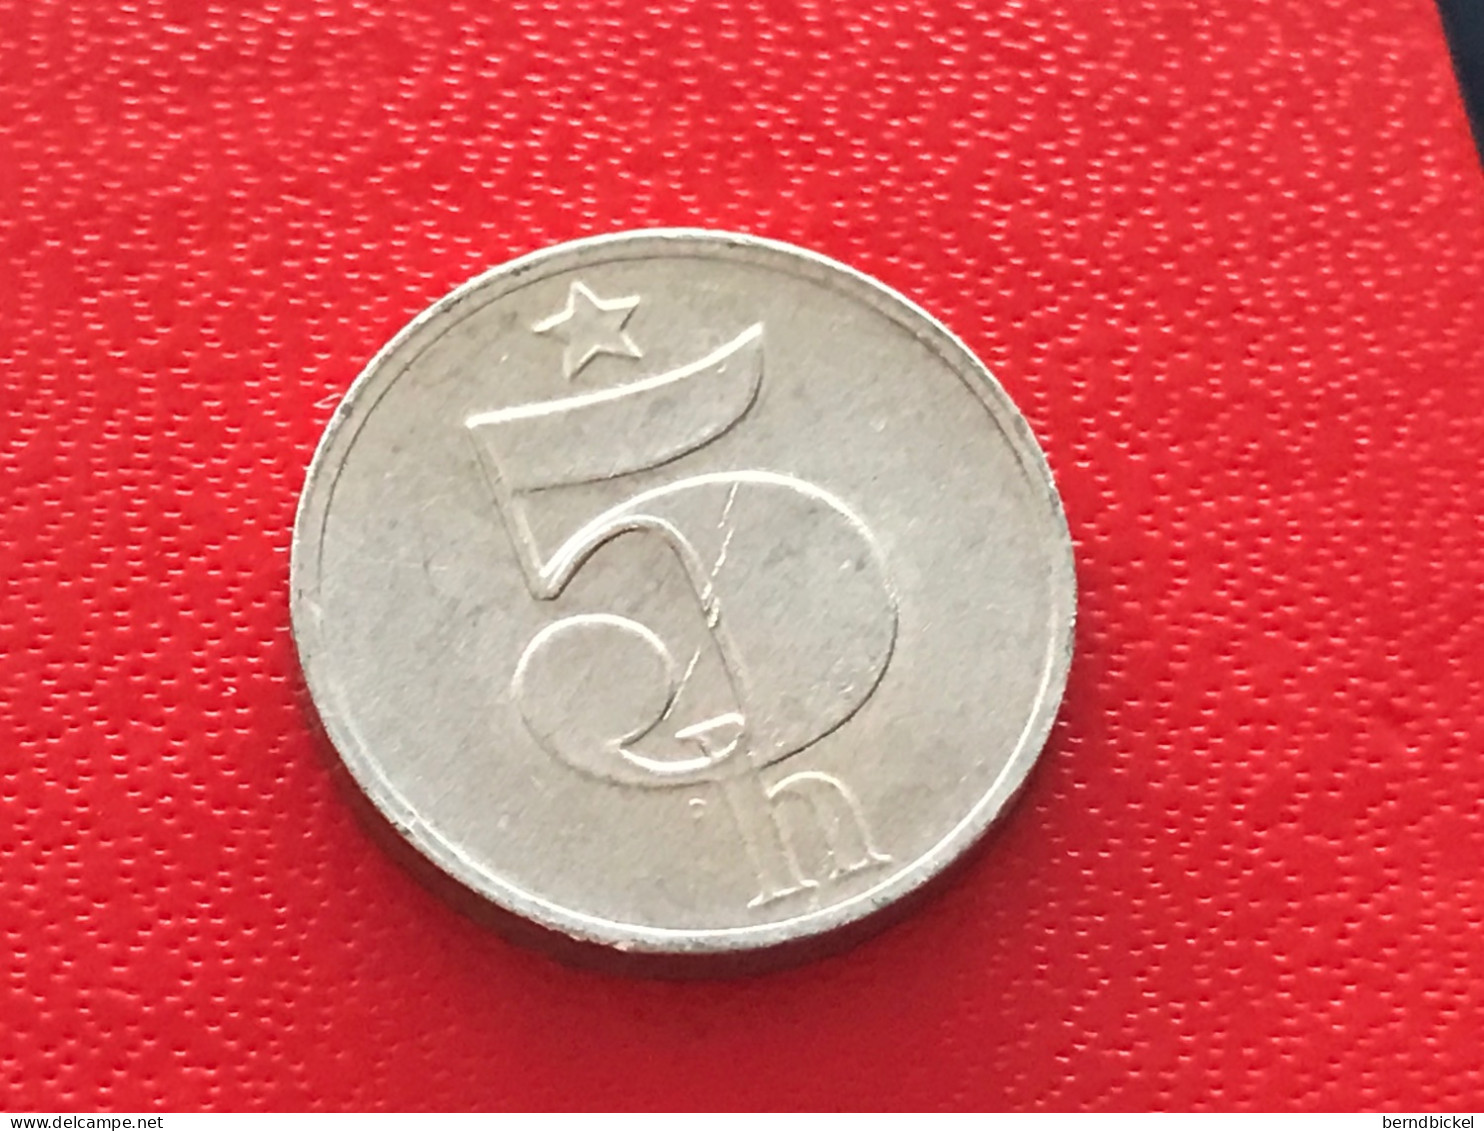 Münze Münzen Umlaufmünze Tschechoslowakei 5 Heller 1977 - Czechoslovakia